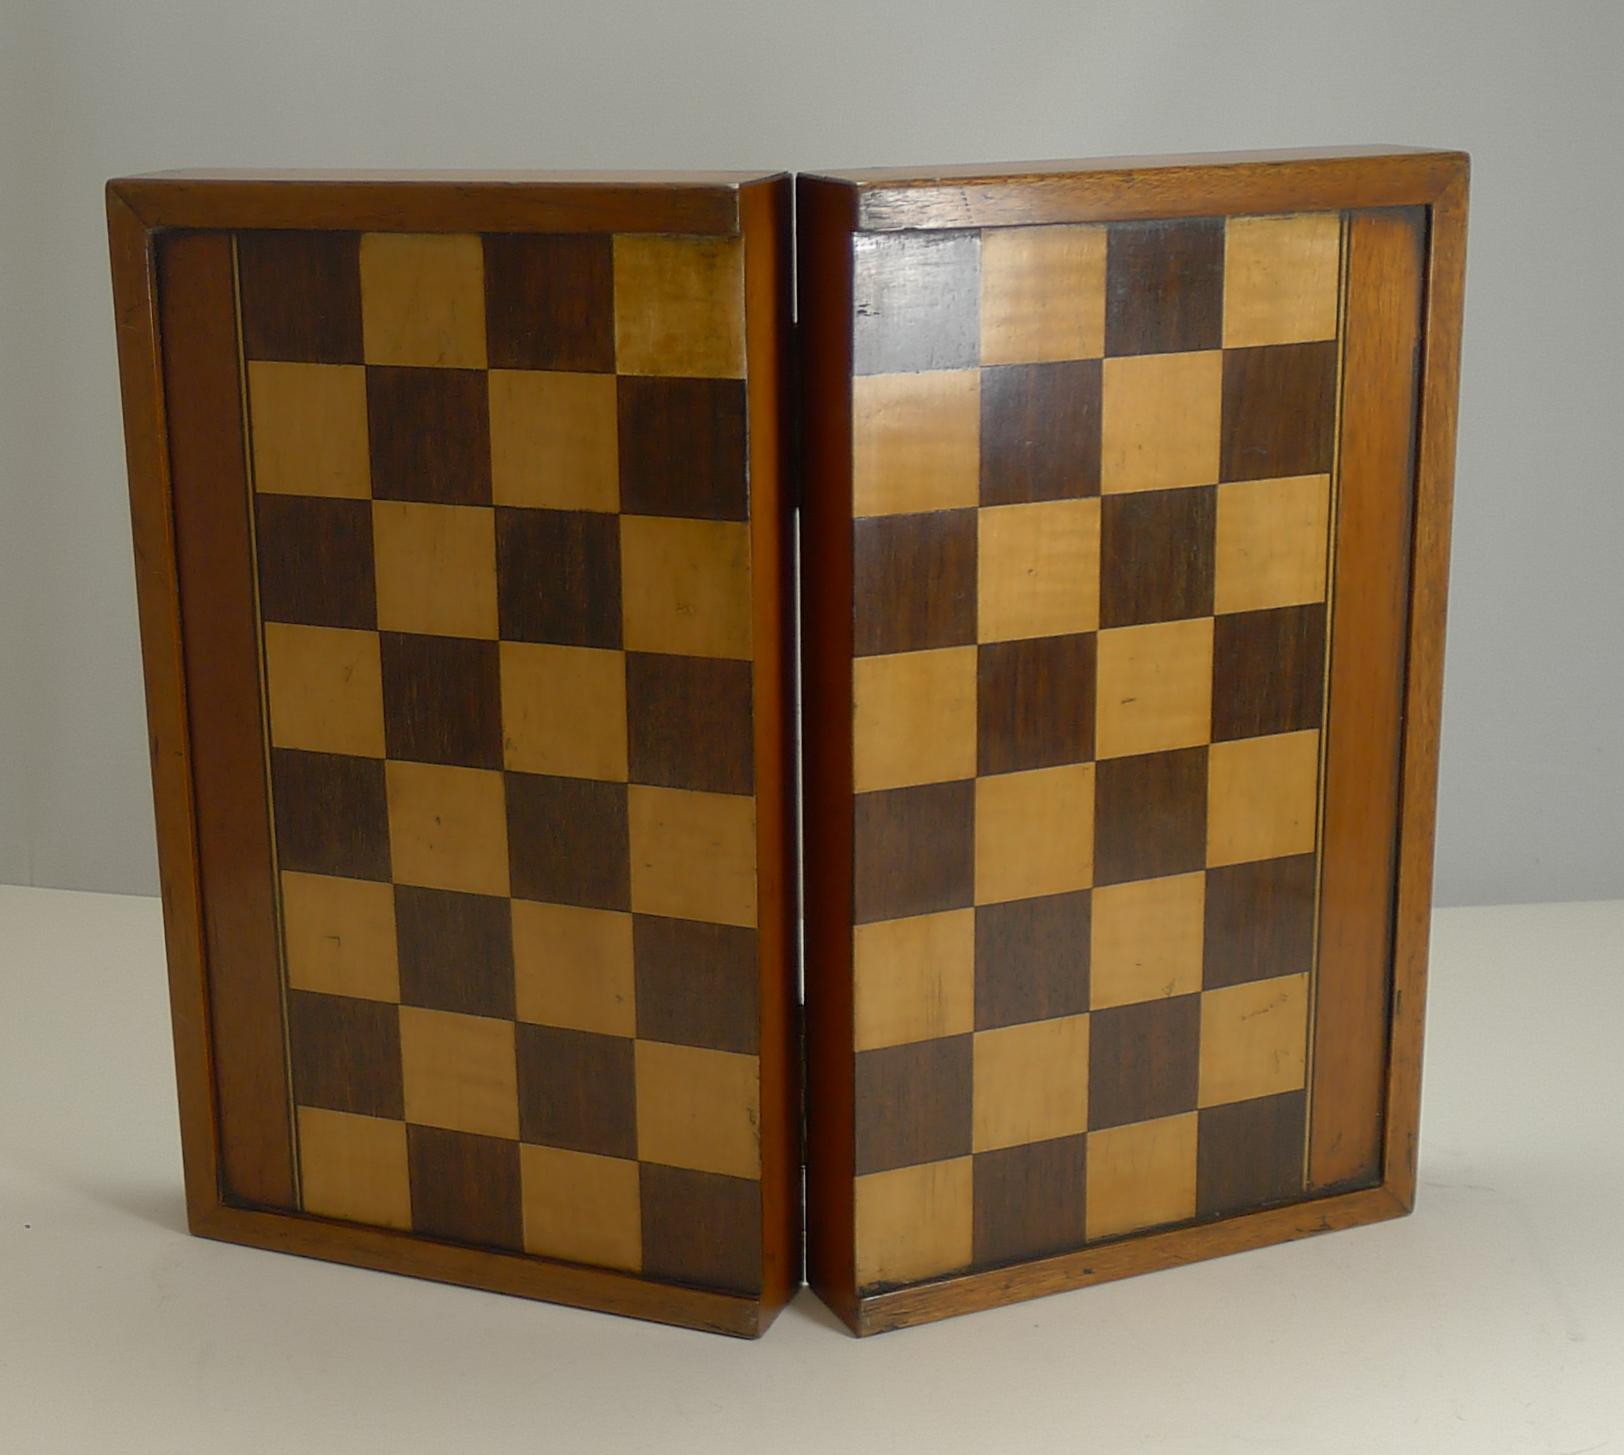 Fruitwood Antique English Folding Chess / Backgammon / Checkers Board, circa 1890-1900